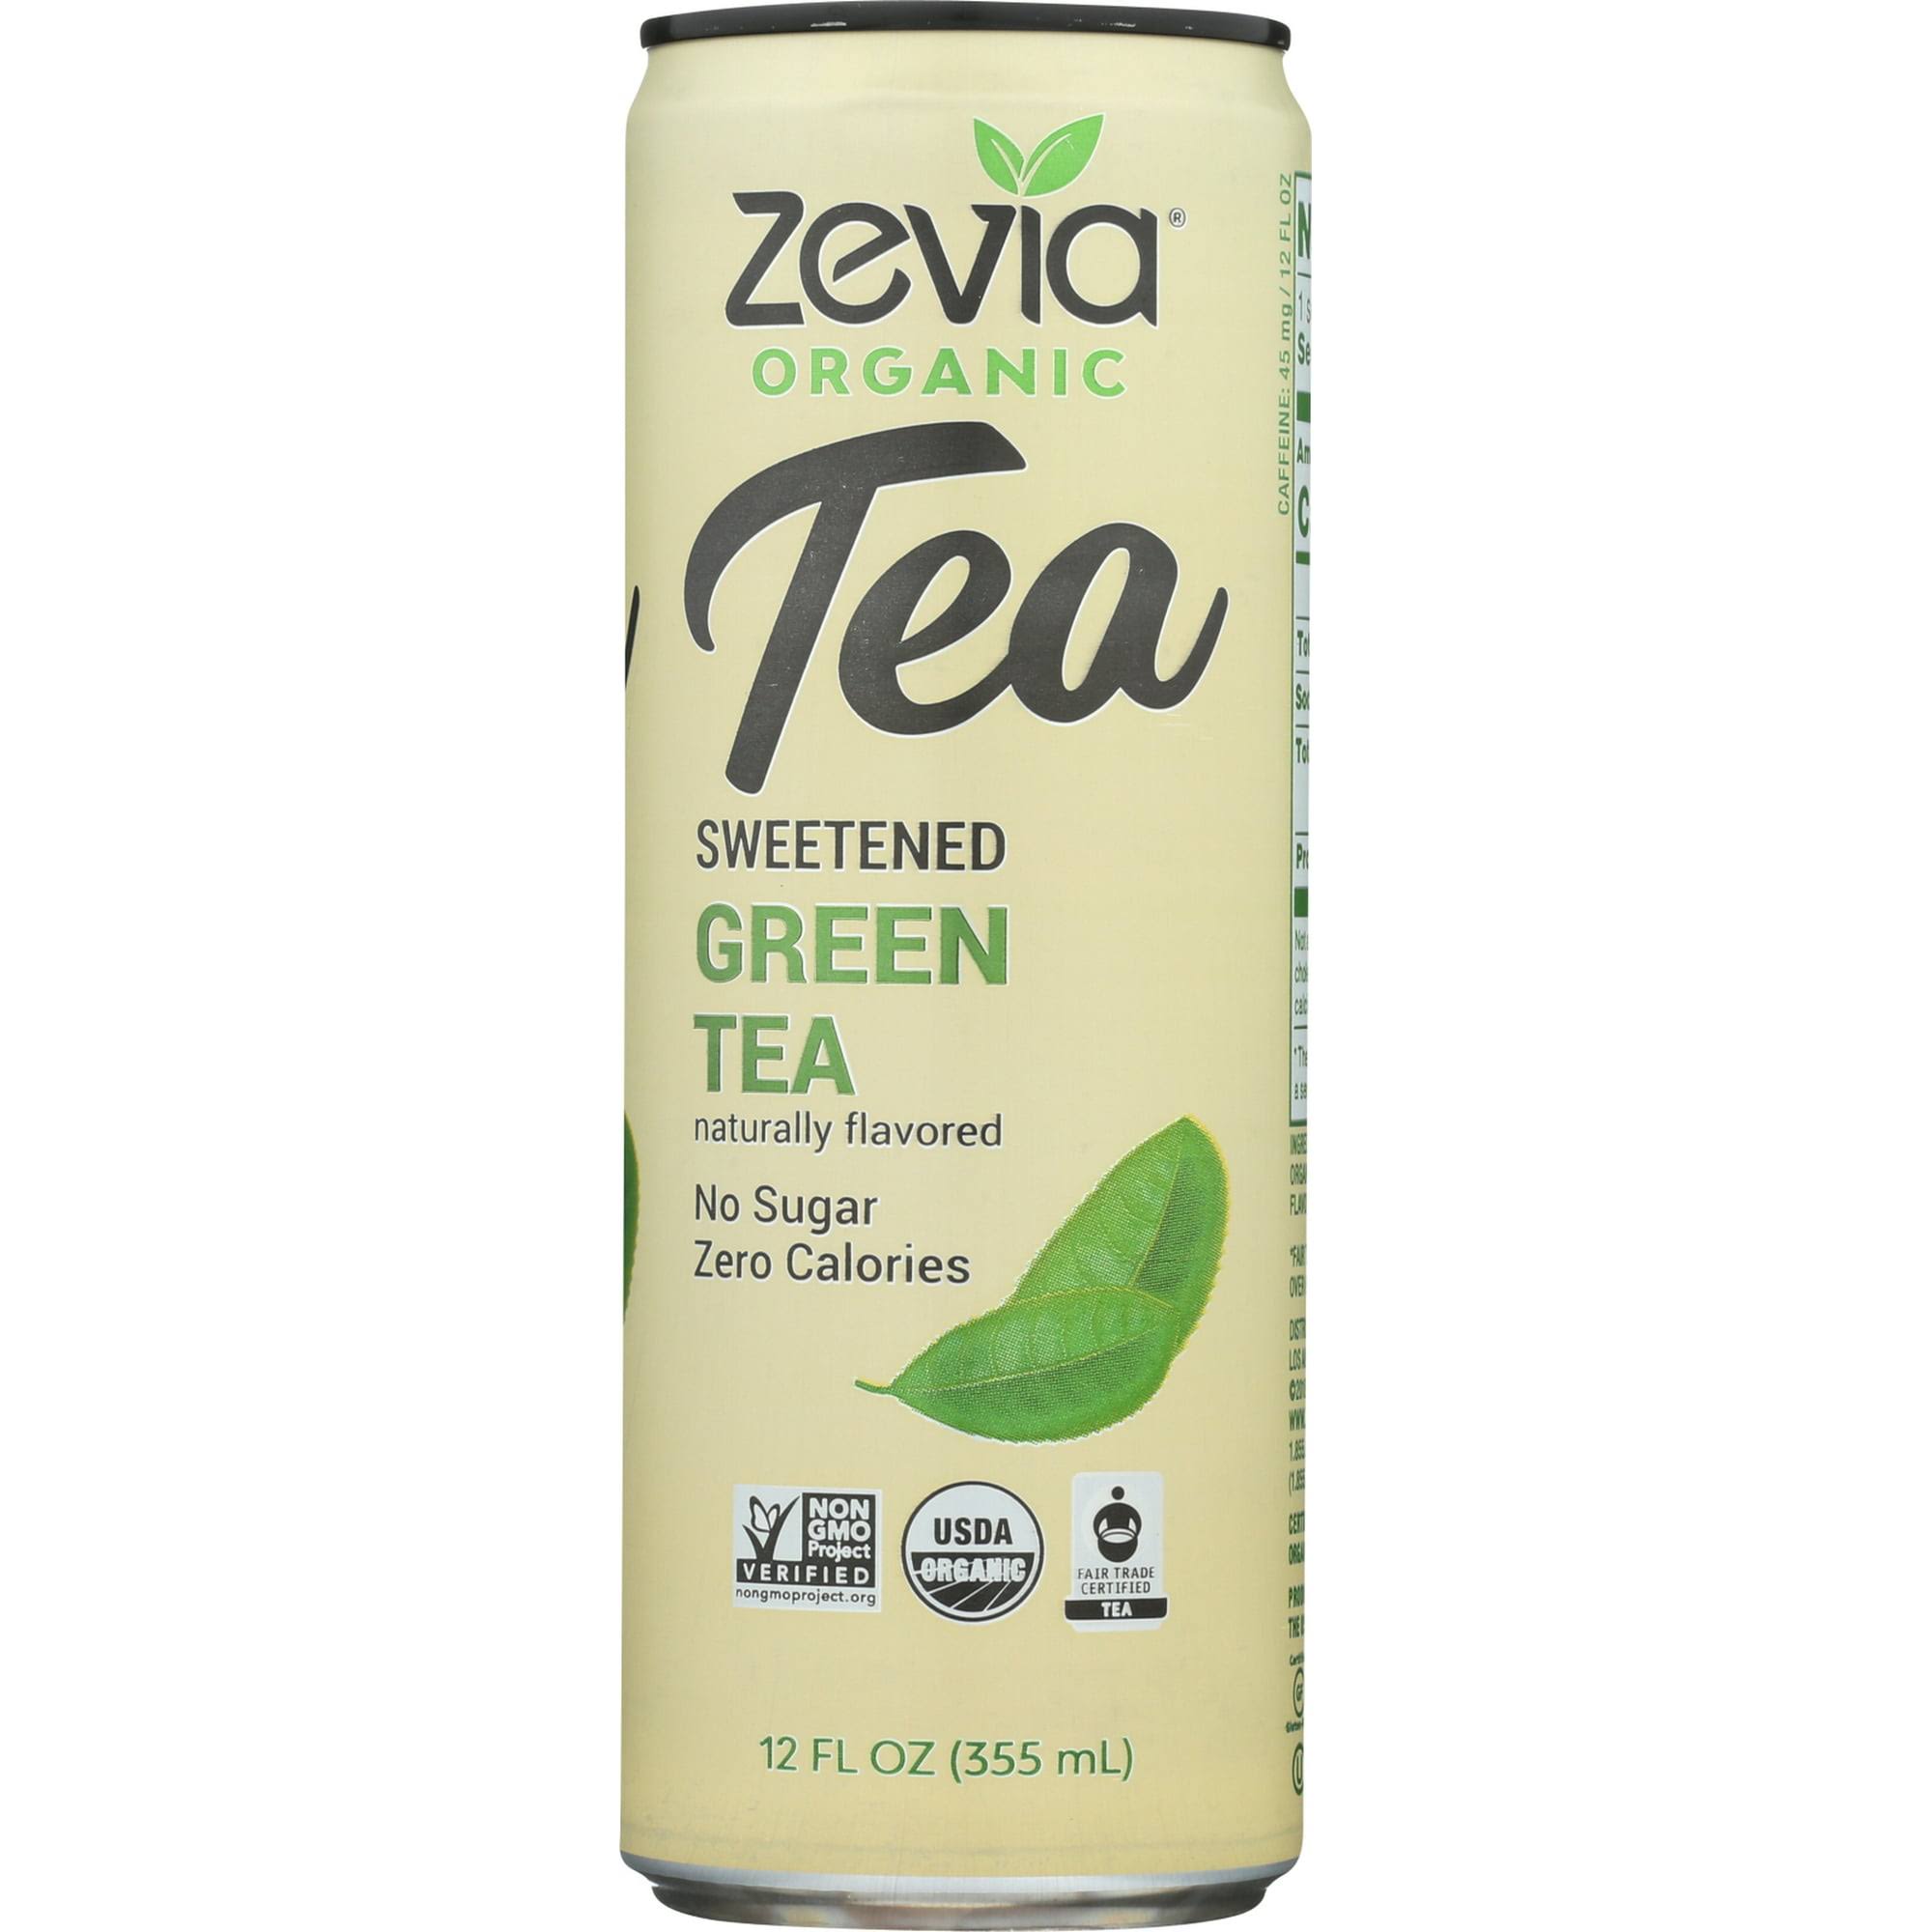 Zevia Tea, Green, Organic, Sweetened - 12 fl oz